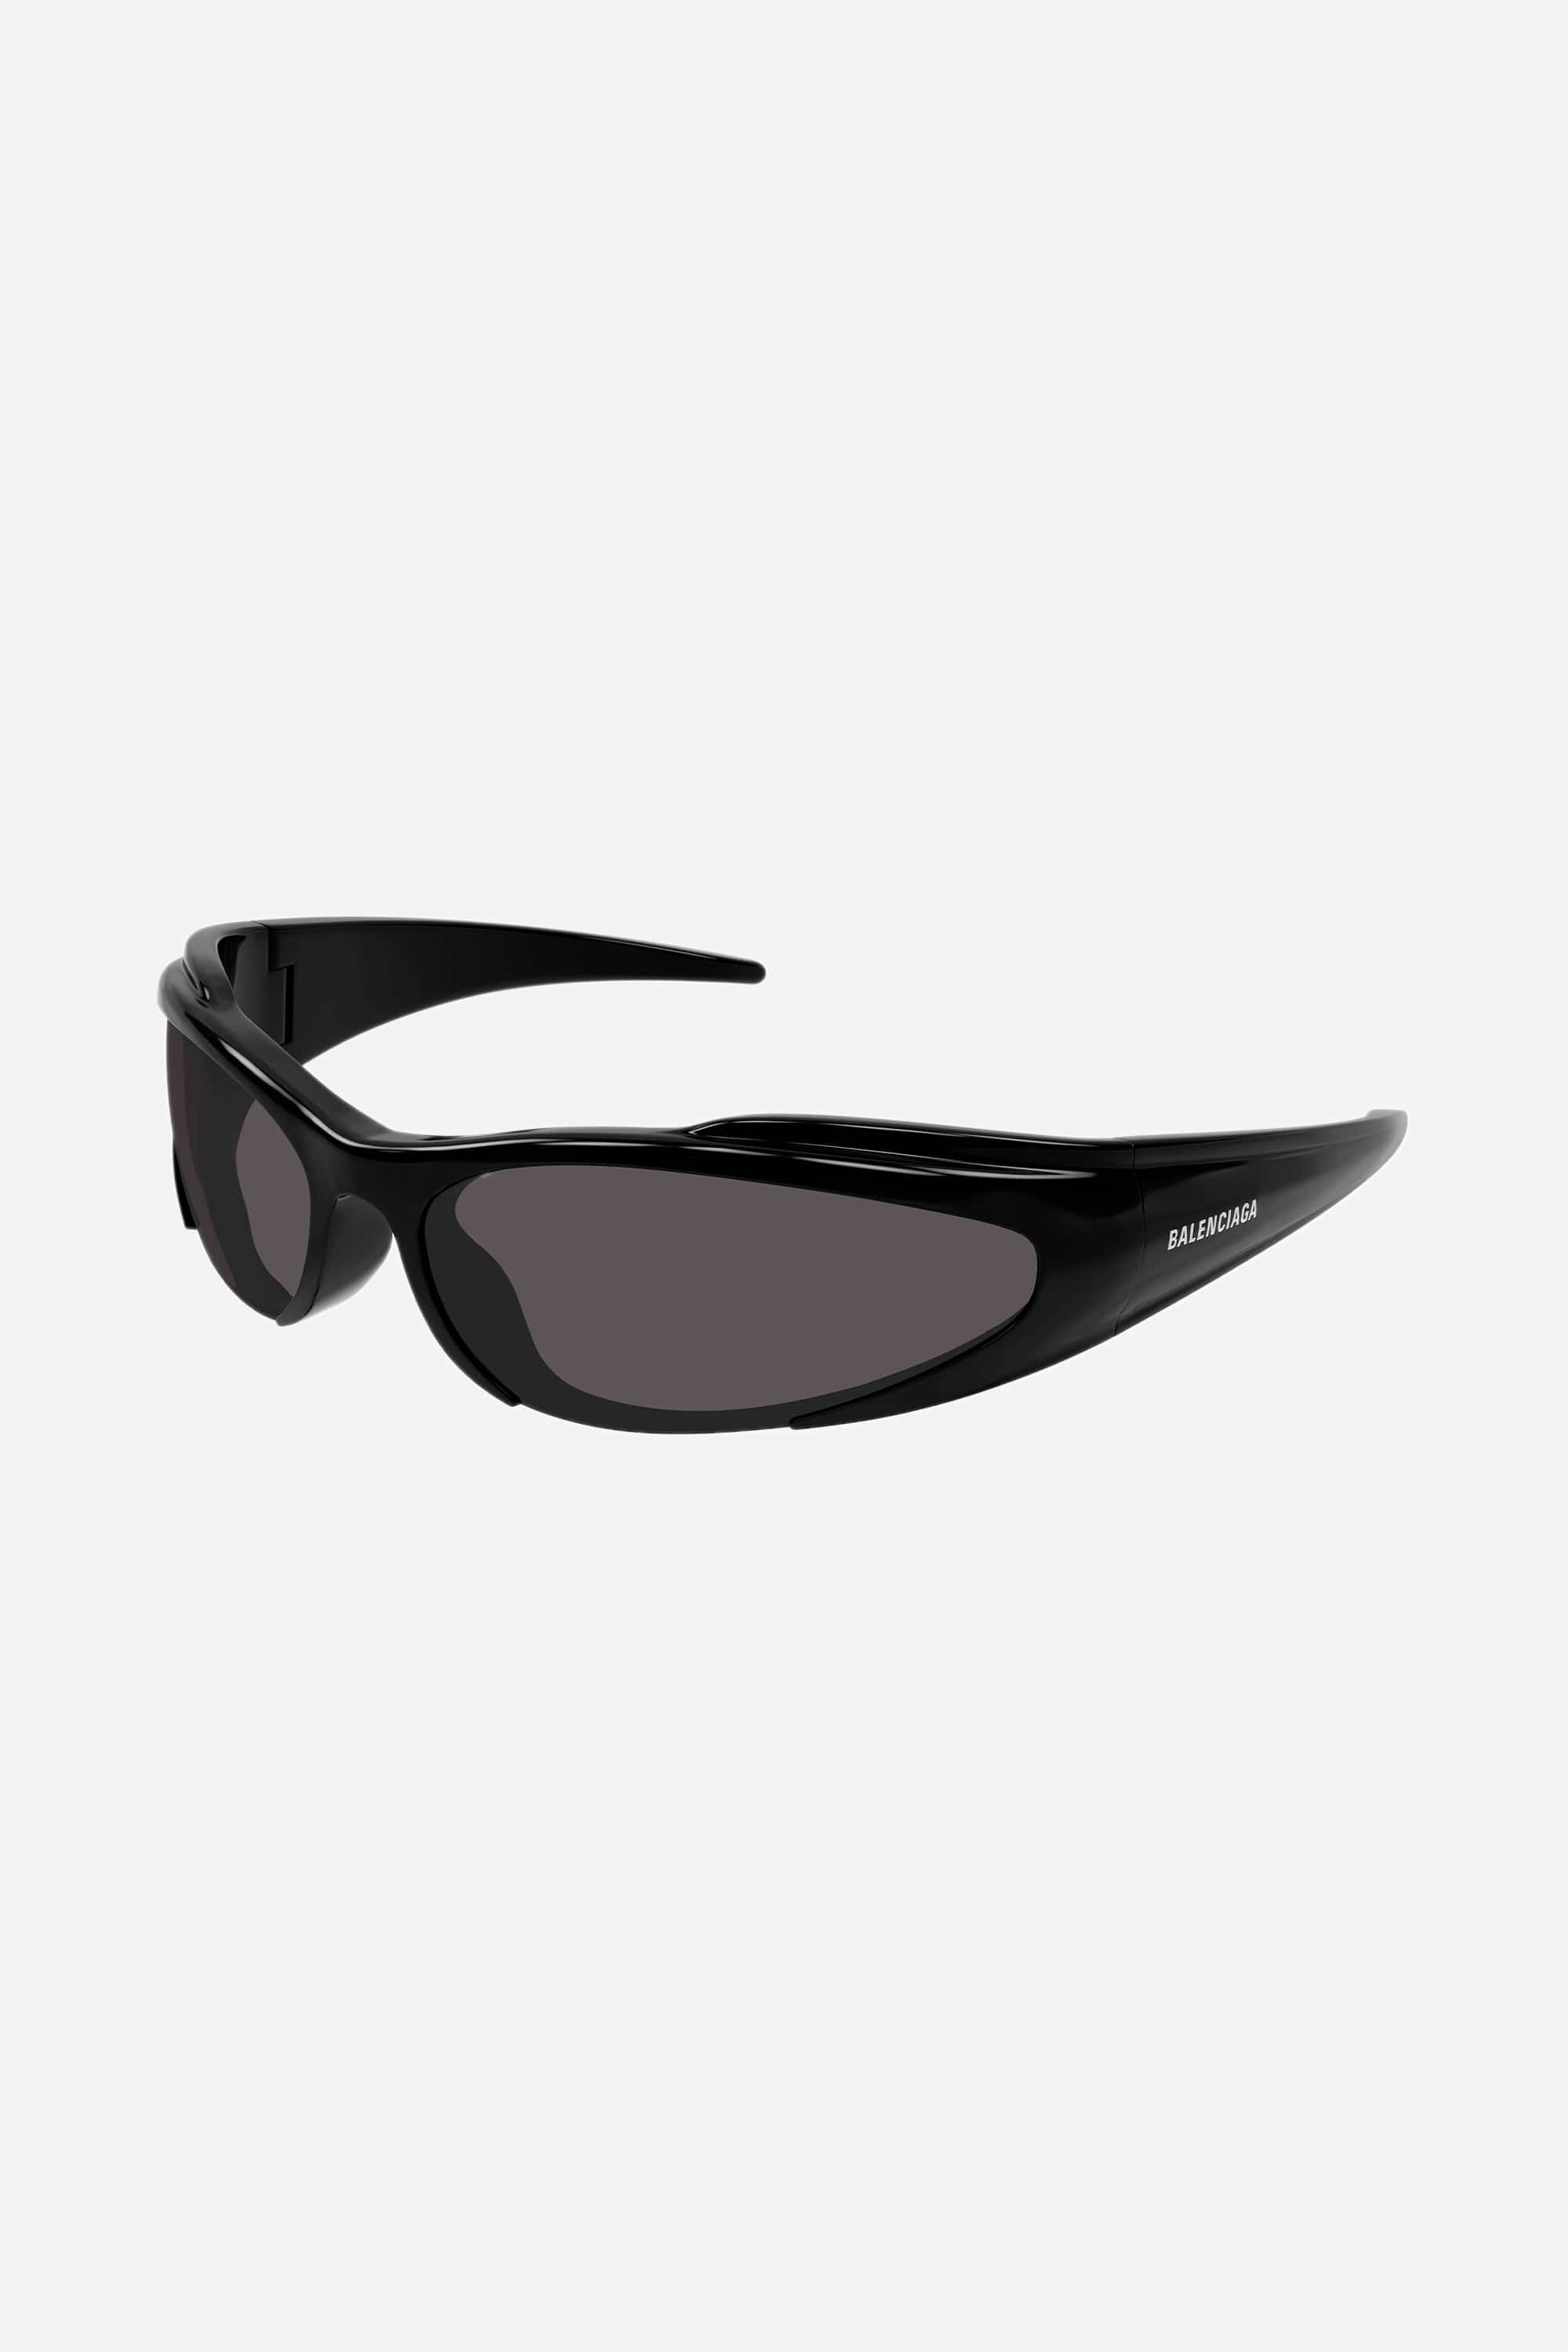 Balenciaga reverse Xpander wrap rectangle black sporty sunglasses - Eyewear Club